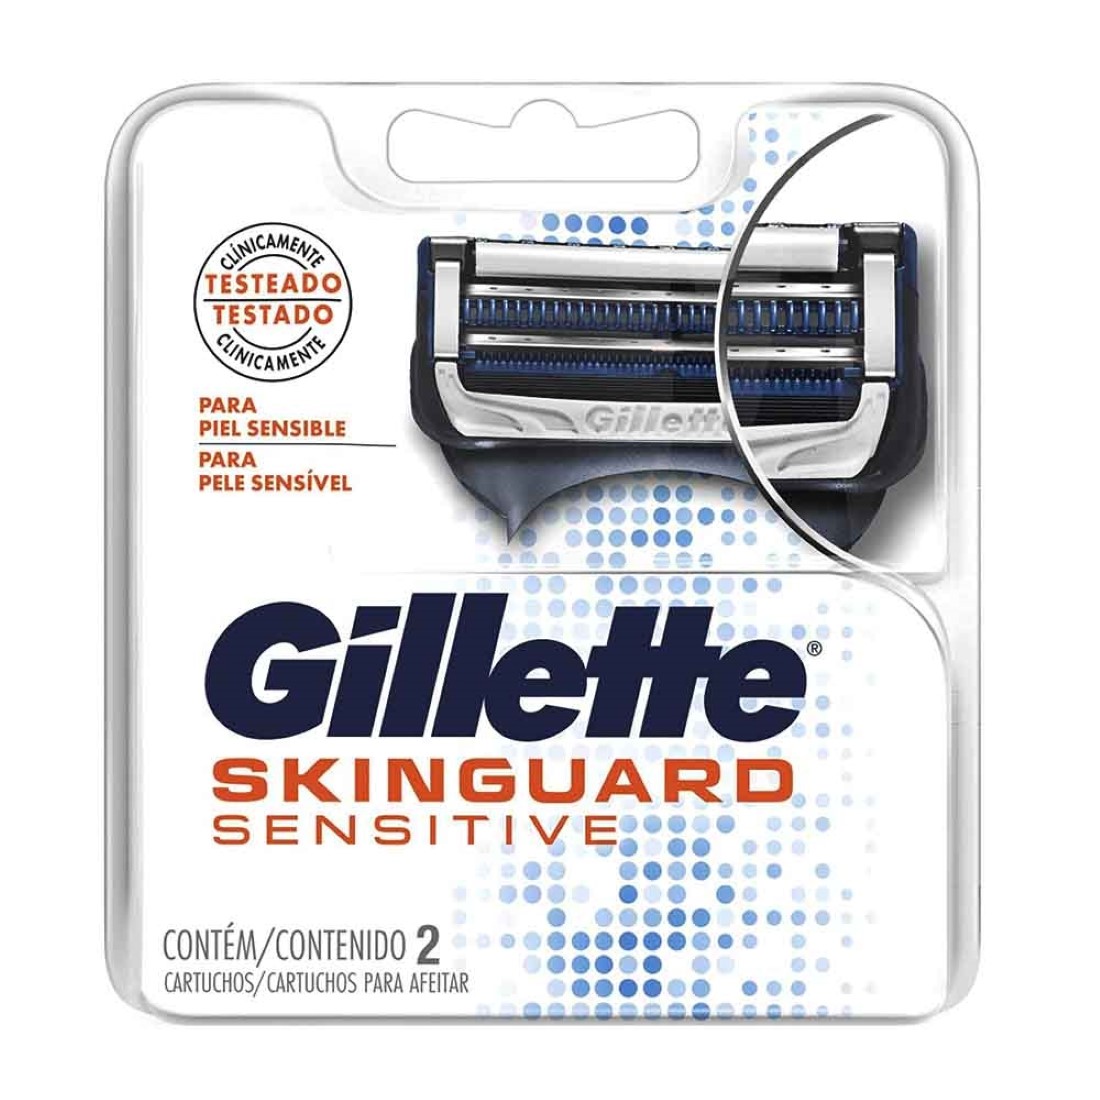 Carga Skinguard Sensitive com 2 Cartuchos - Gillette